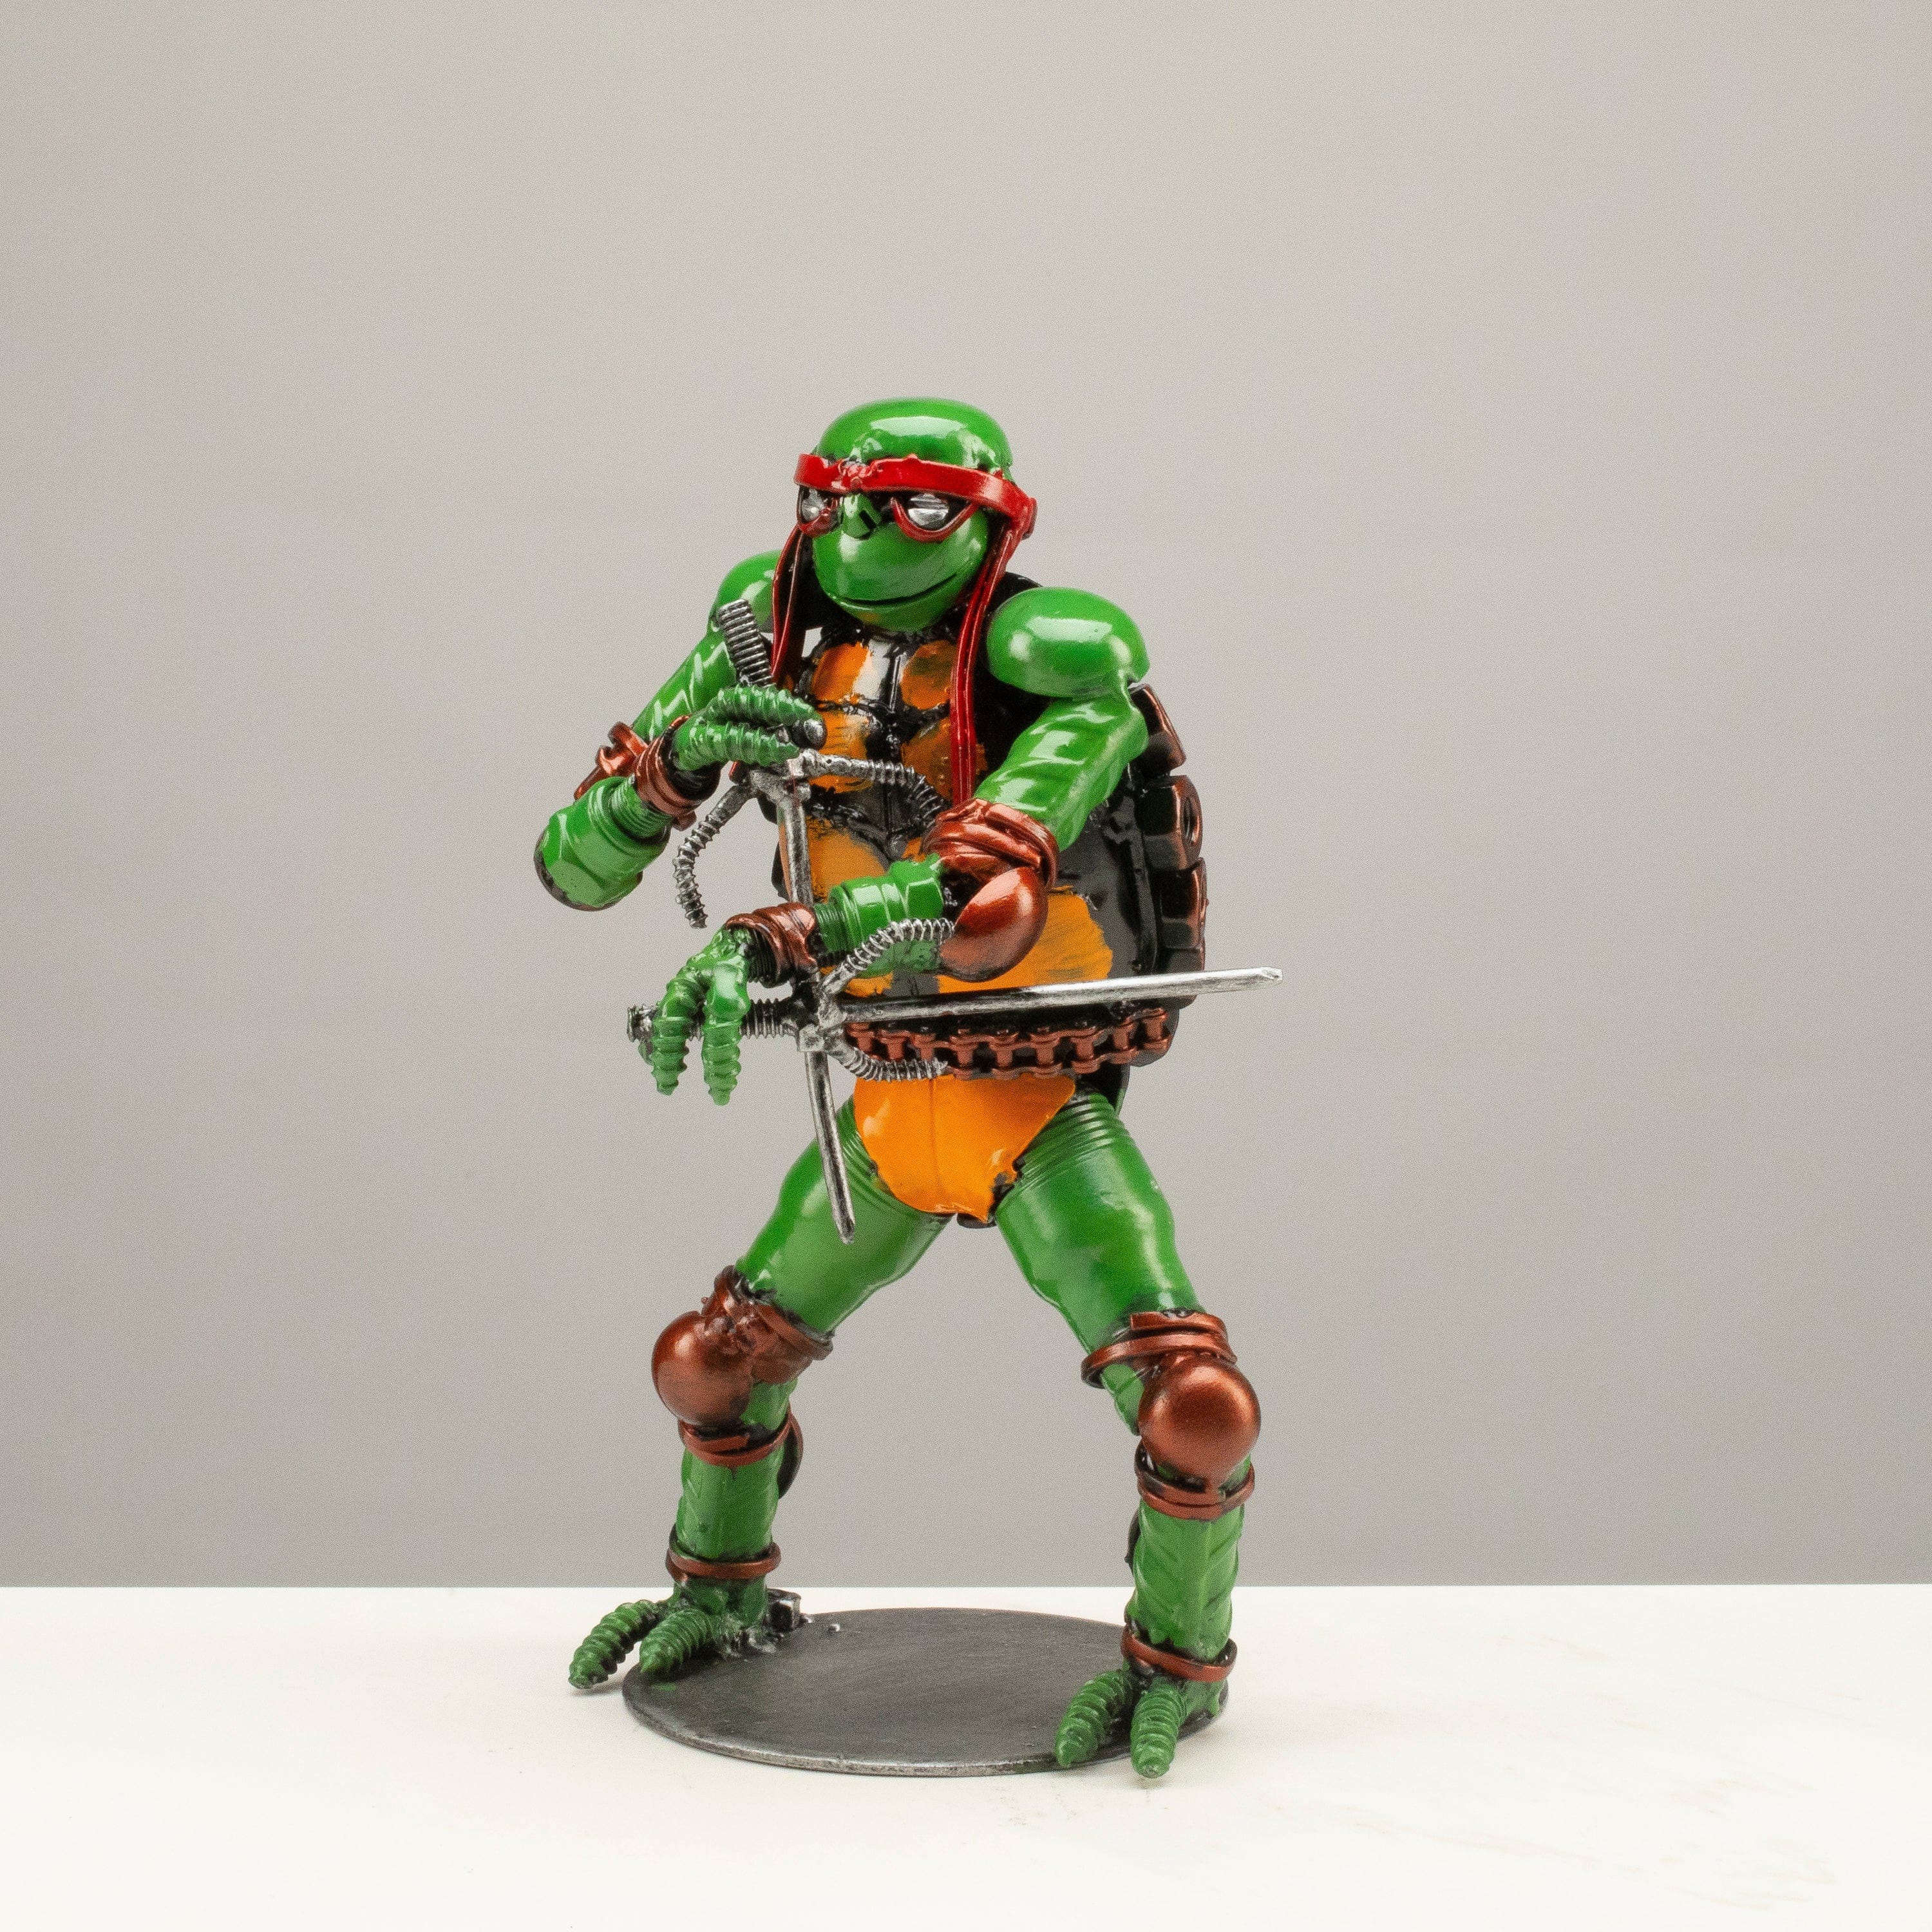 Kalifano Recycled Metal Art 9.5" Raphael Ninja Turtle Inspired Recycled Metal Sculpture RMS-600NTR-N